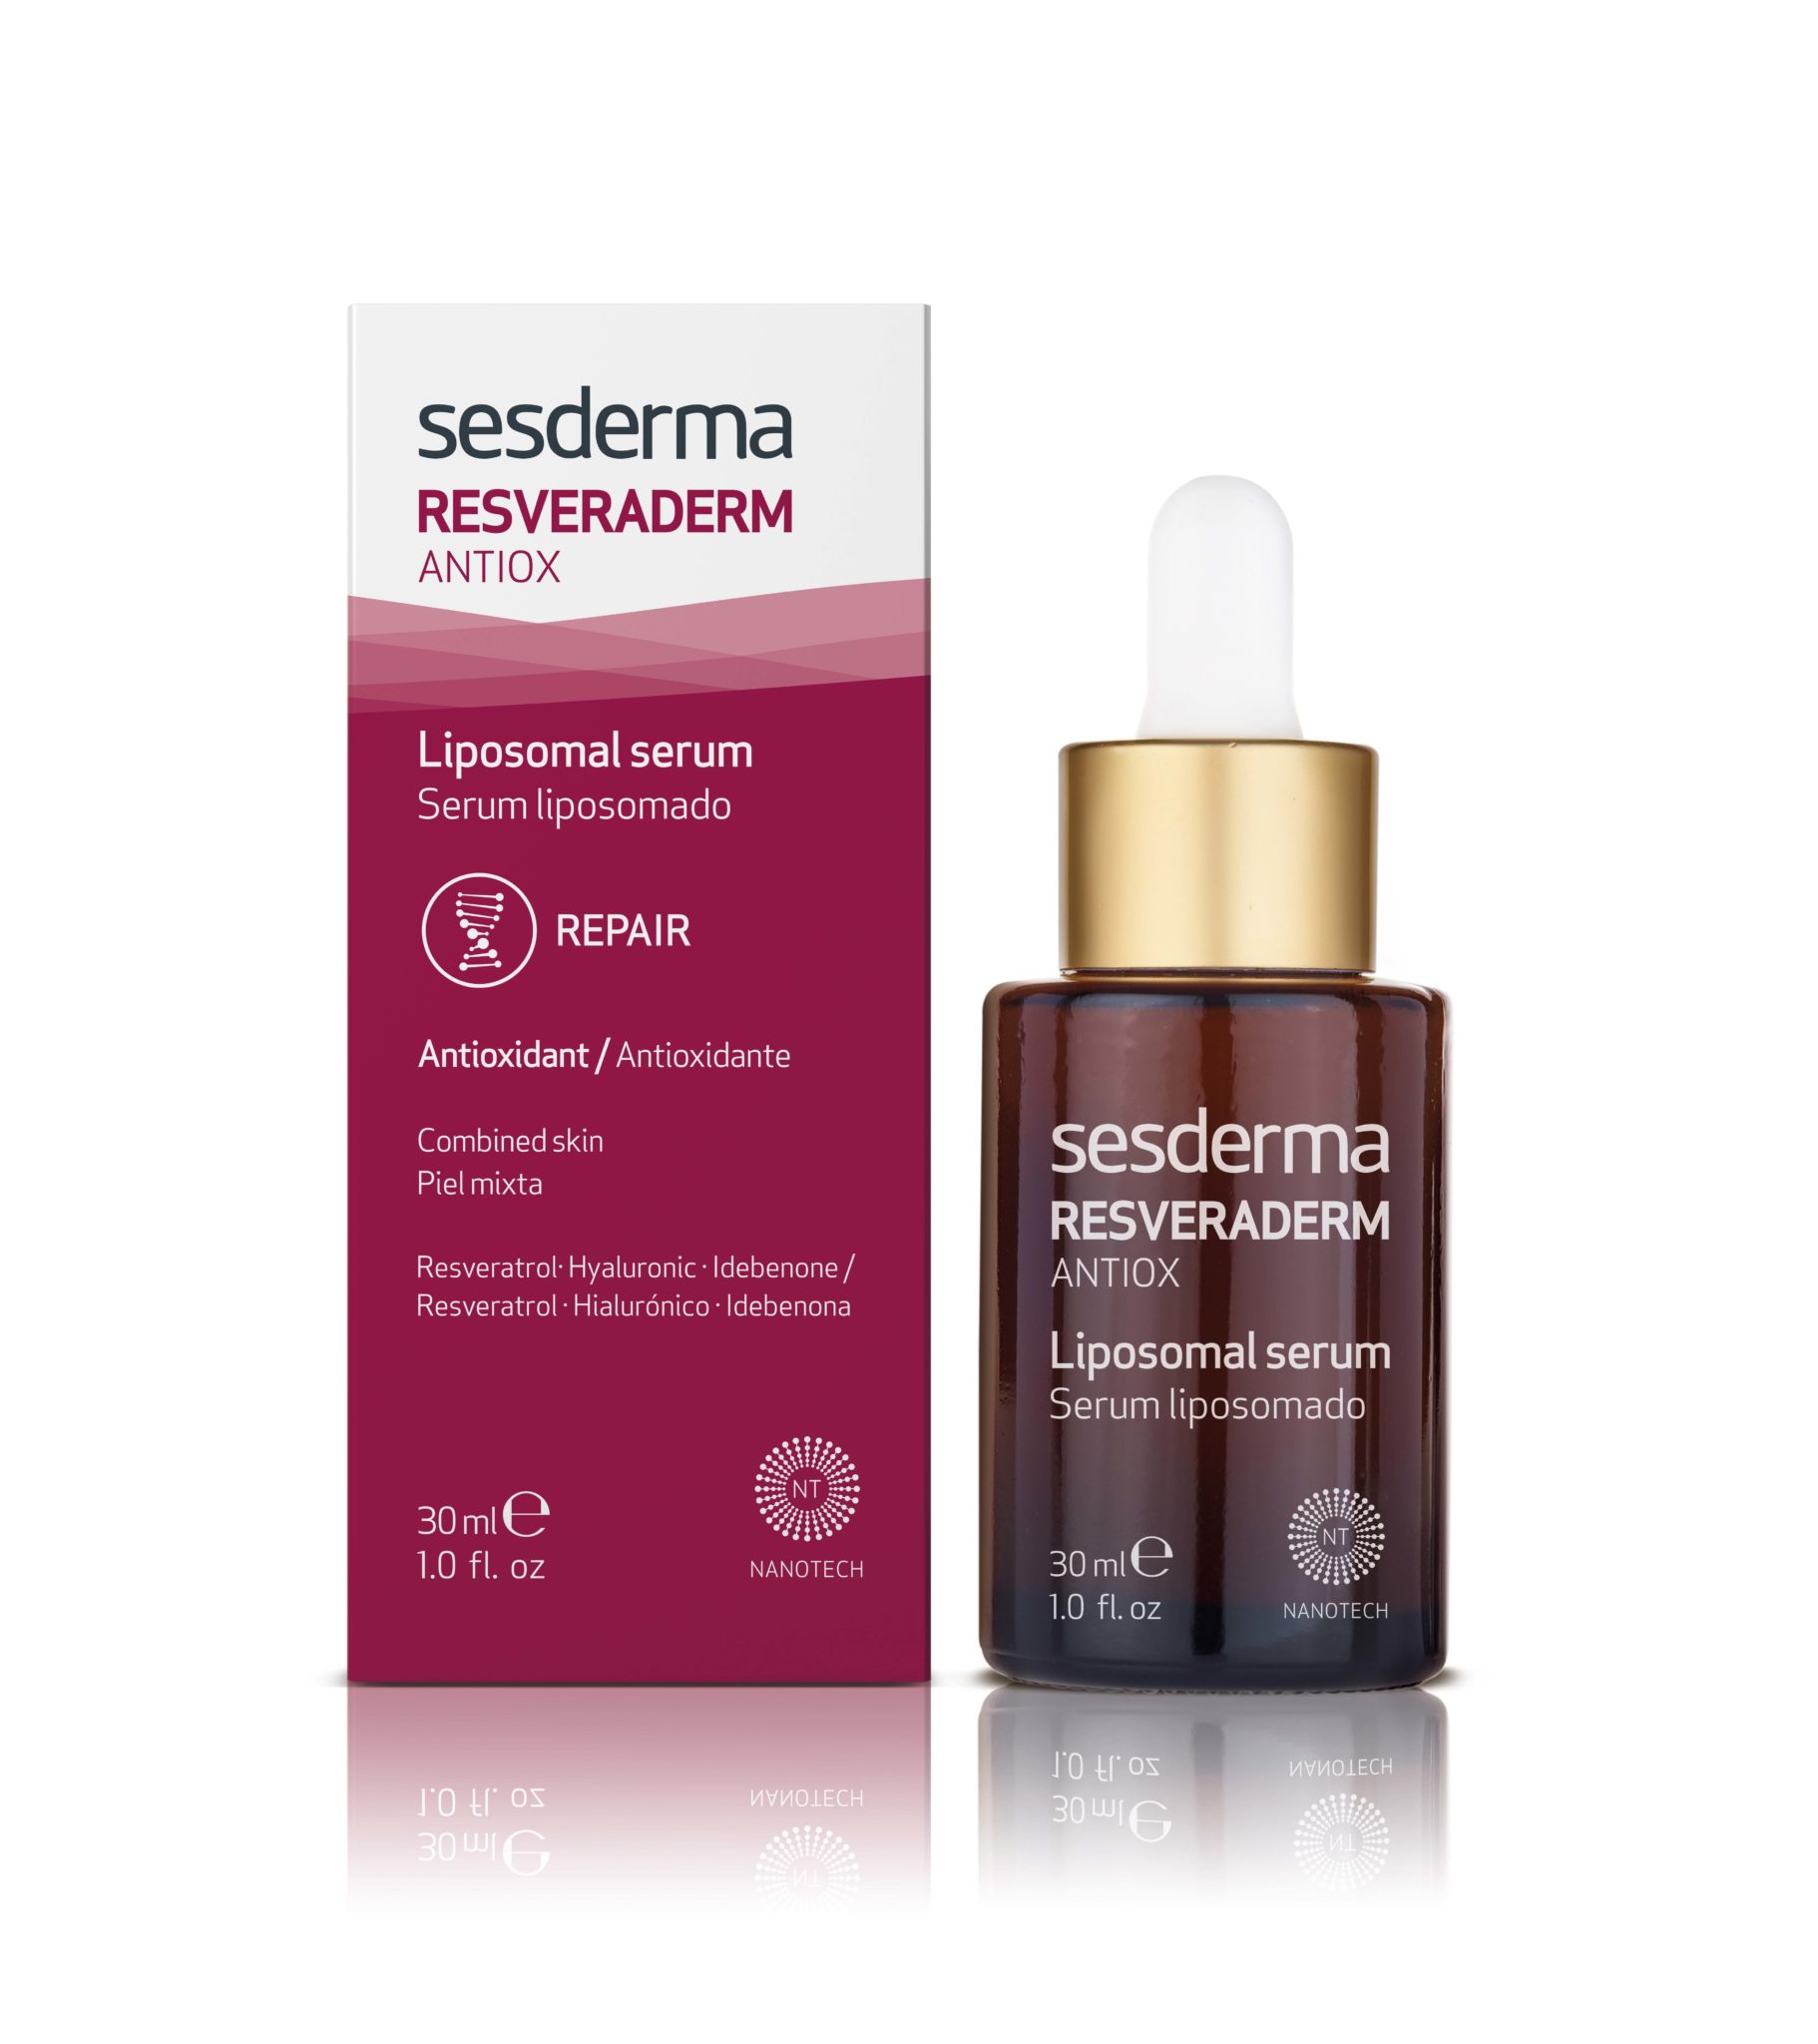 SESDERMA RESVERADERM Antiox Lip. Serum Sis.Butylphenyl methylpropional